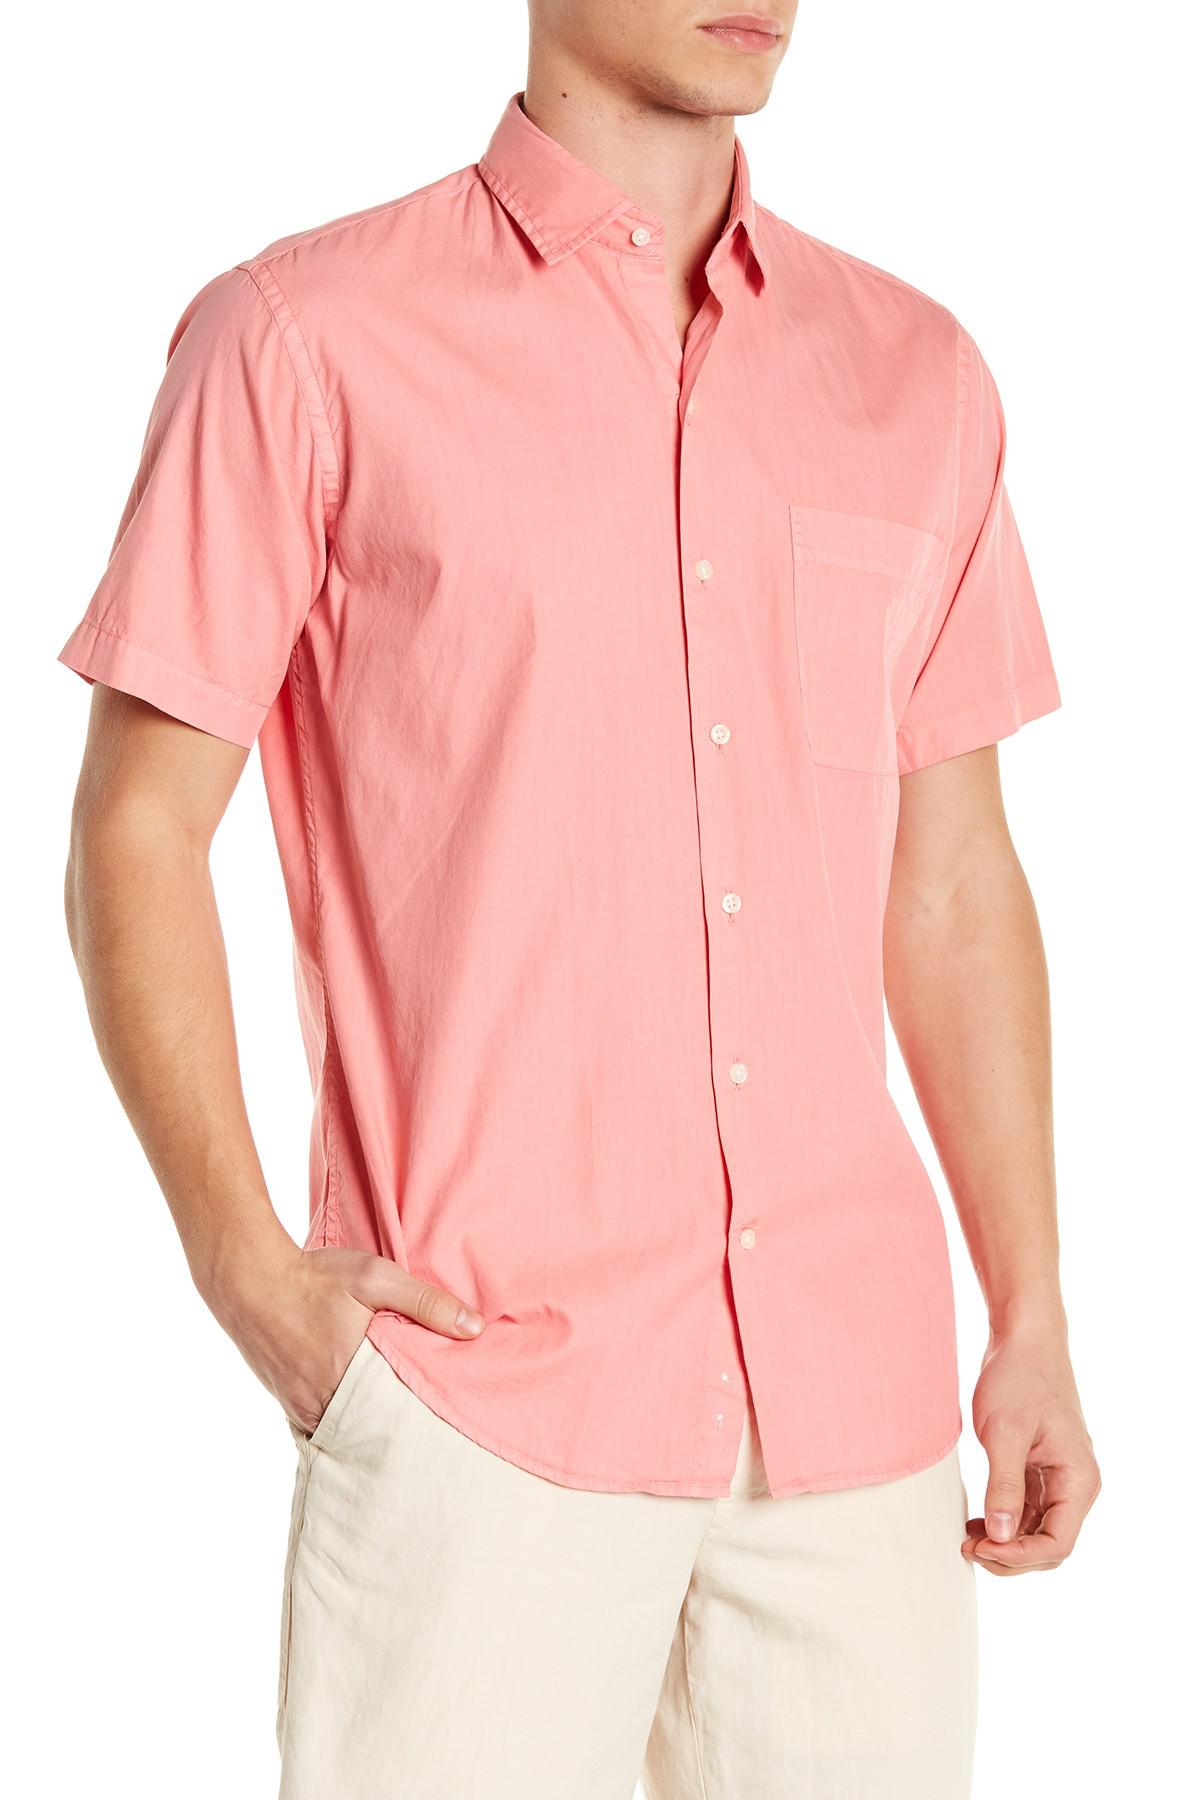 Lyst - Peter Millar Washed Regular Fit Short Sleeve Shirt in Pink for Men